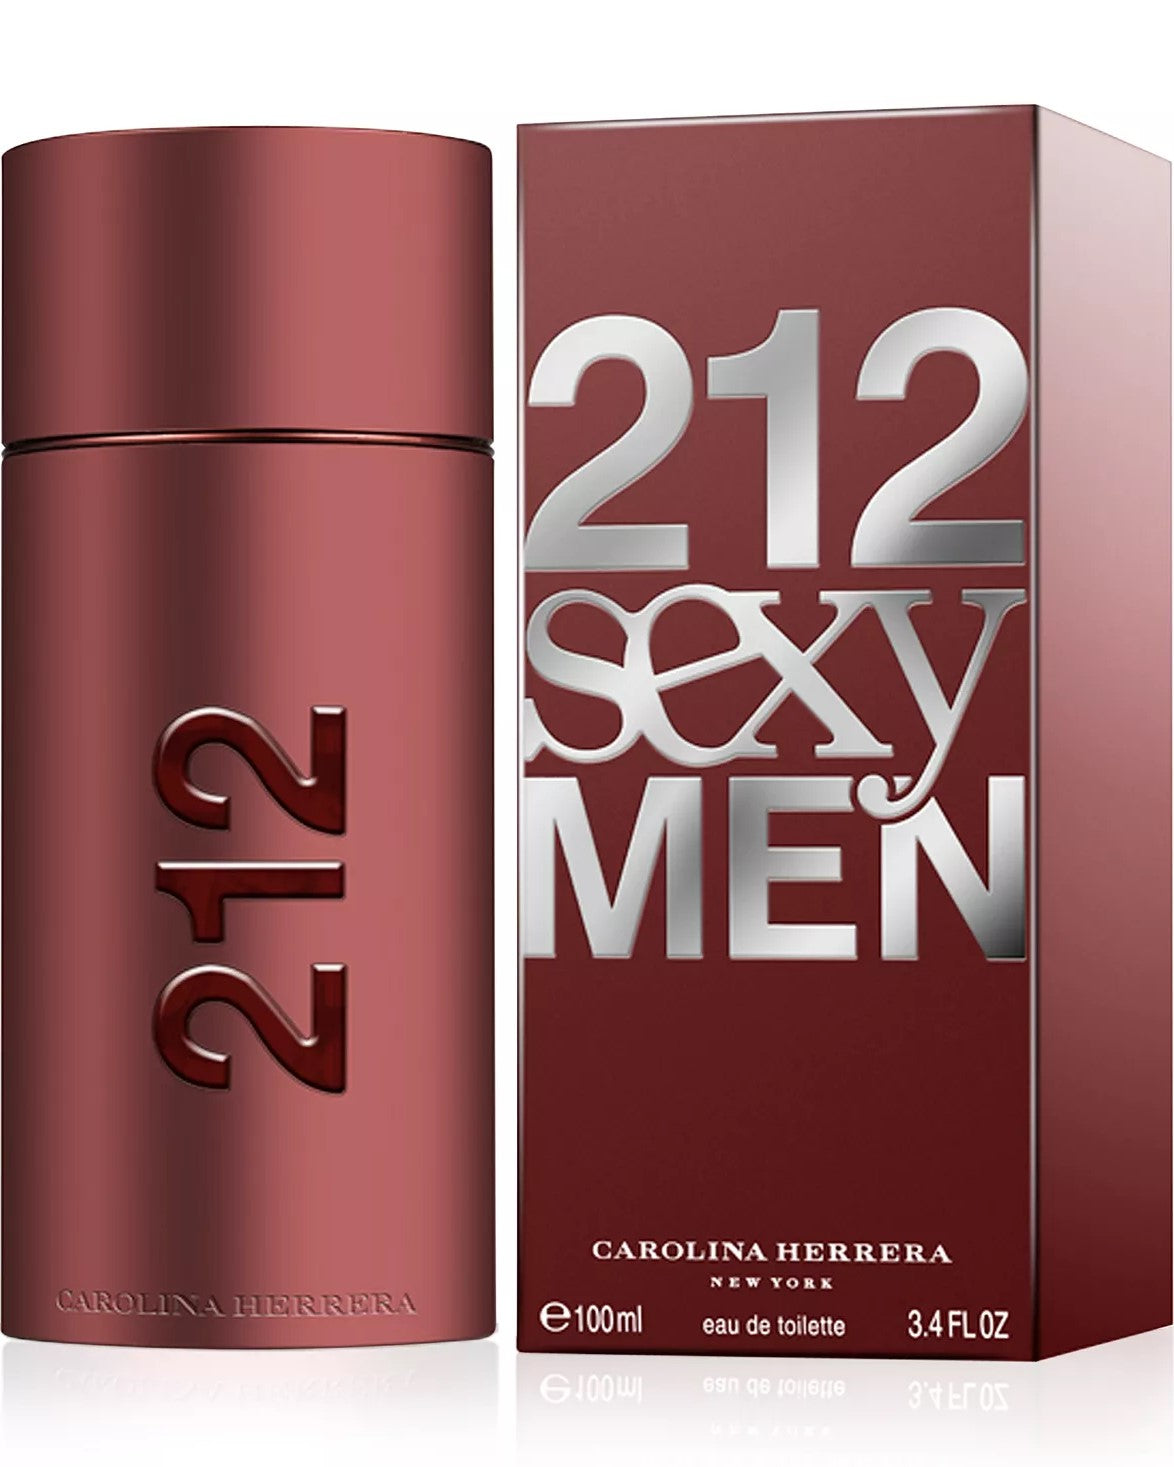 212 Sexy Men Eau de Toilette Spray, 3.4 oz